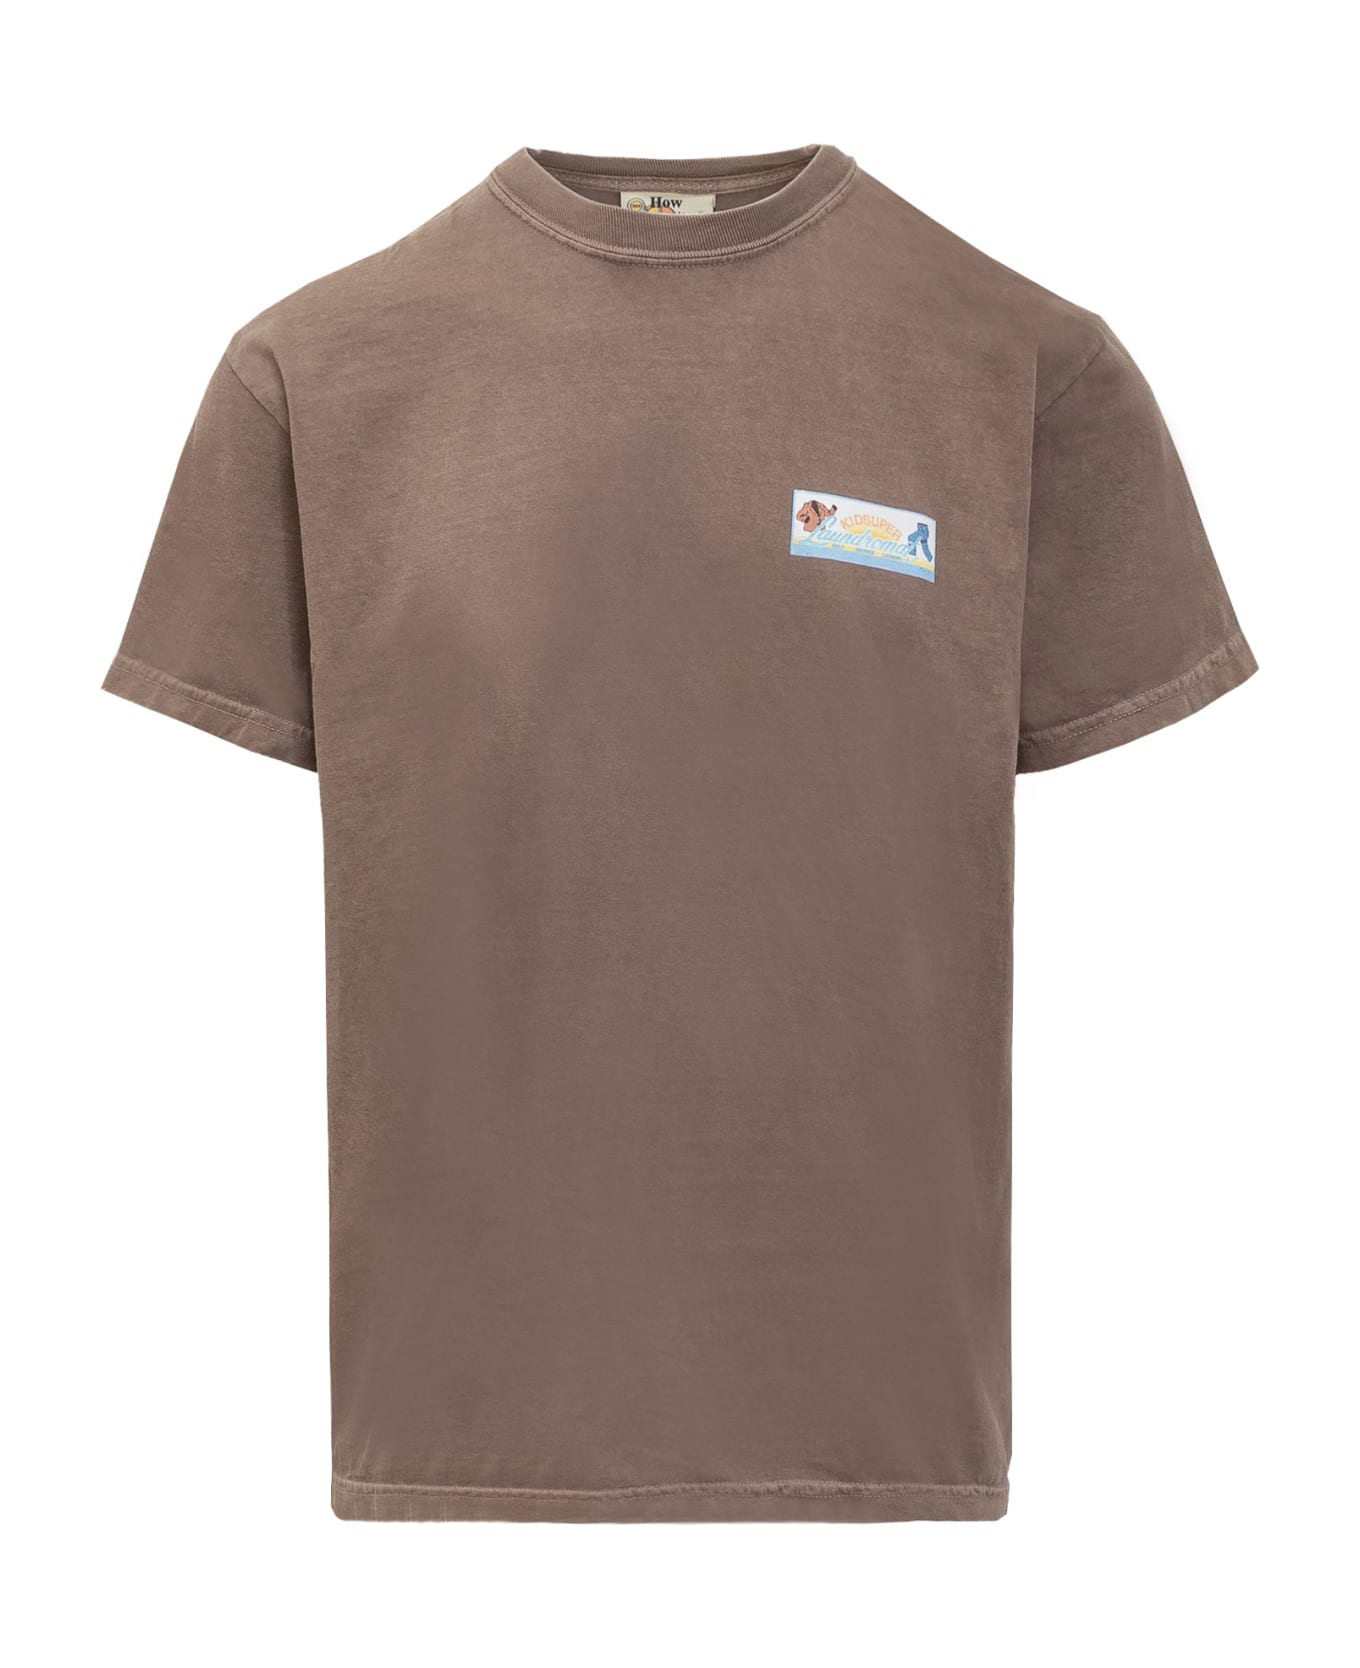 Kidsuper Laundromat T-shirt - BROWN シャツ